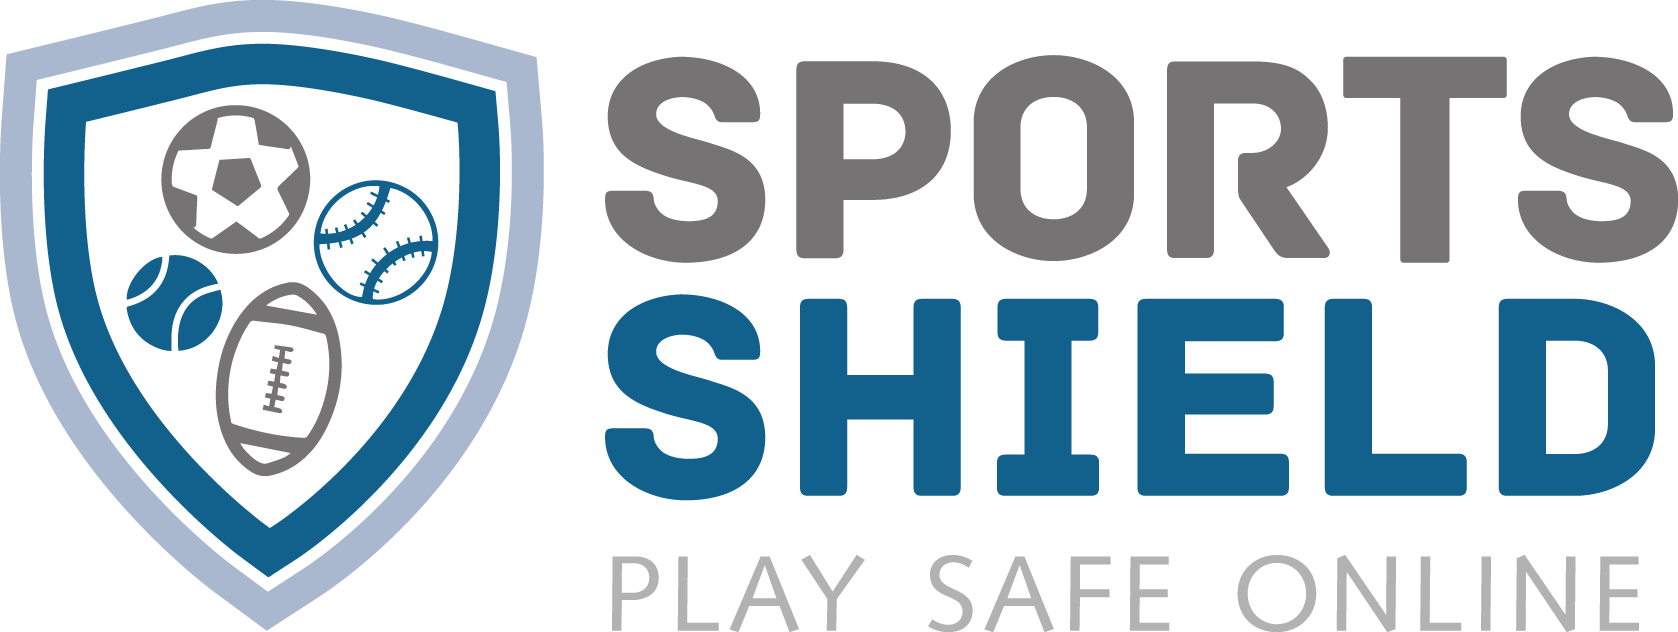 Sports Shield logo